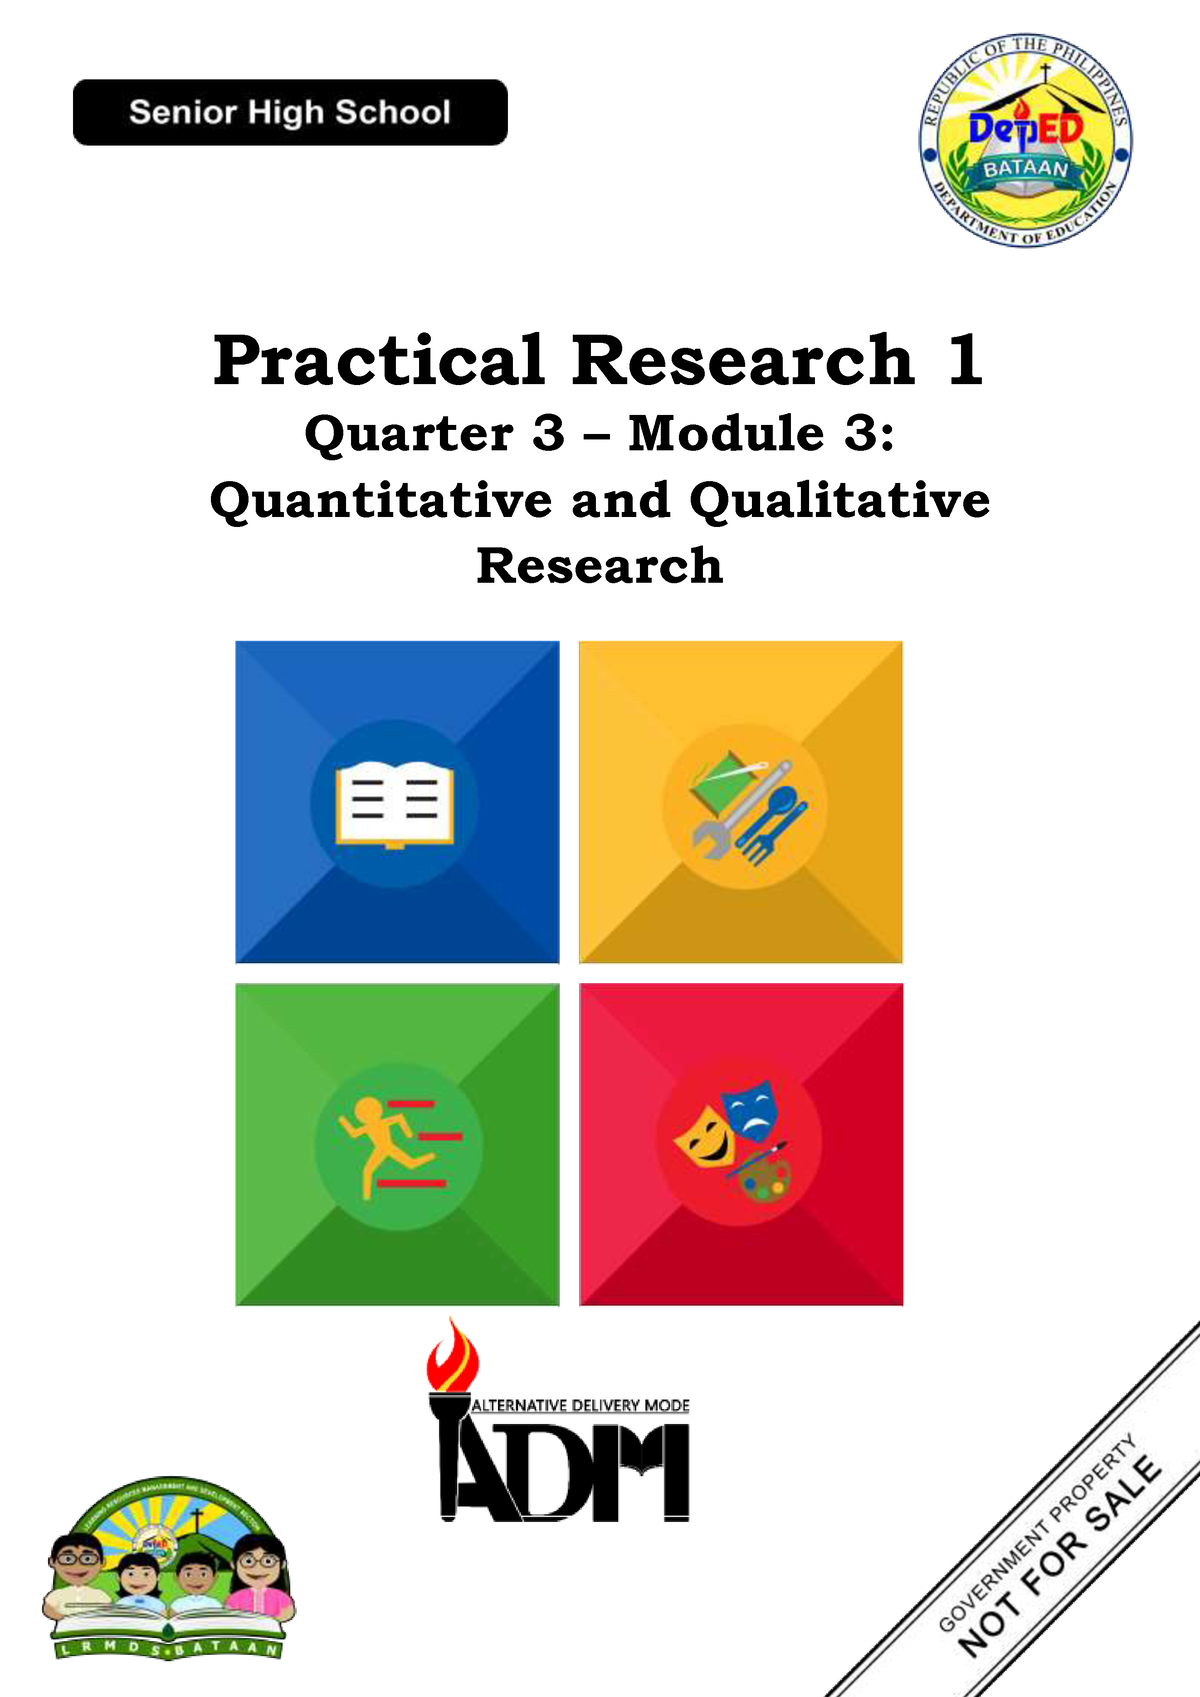 Paano gumawa ng research title - Practical Research 1 Quarter 3